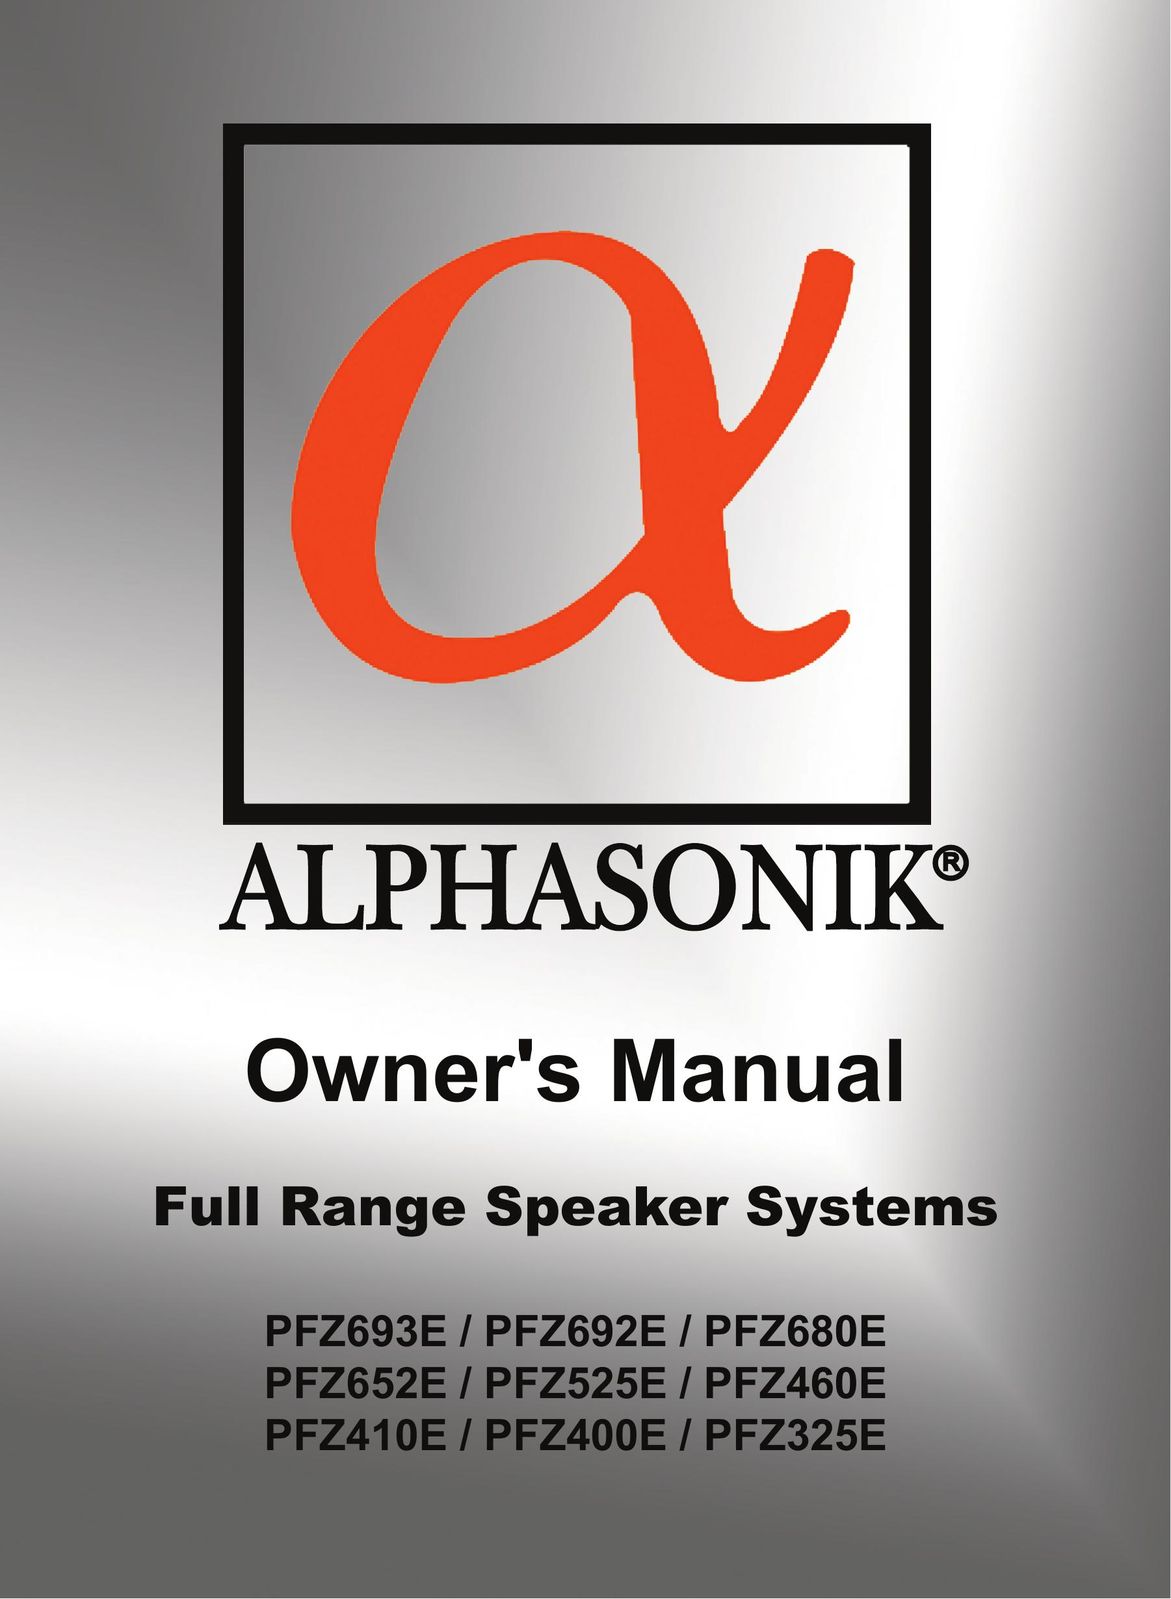 Alphasonik PFZ460E Speaker System User Manual